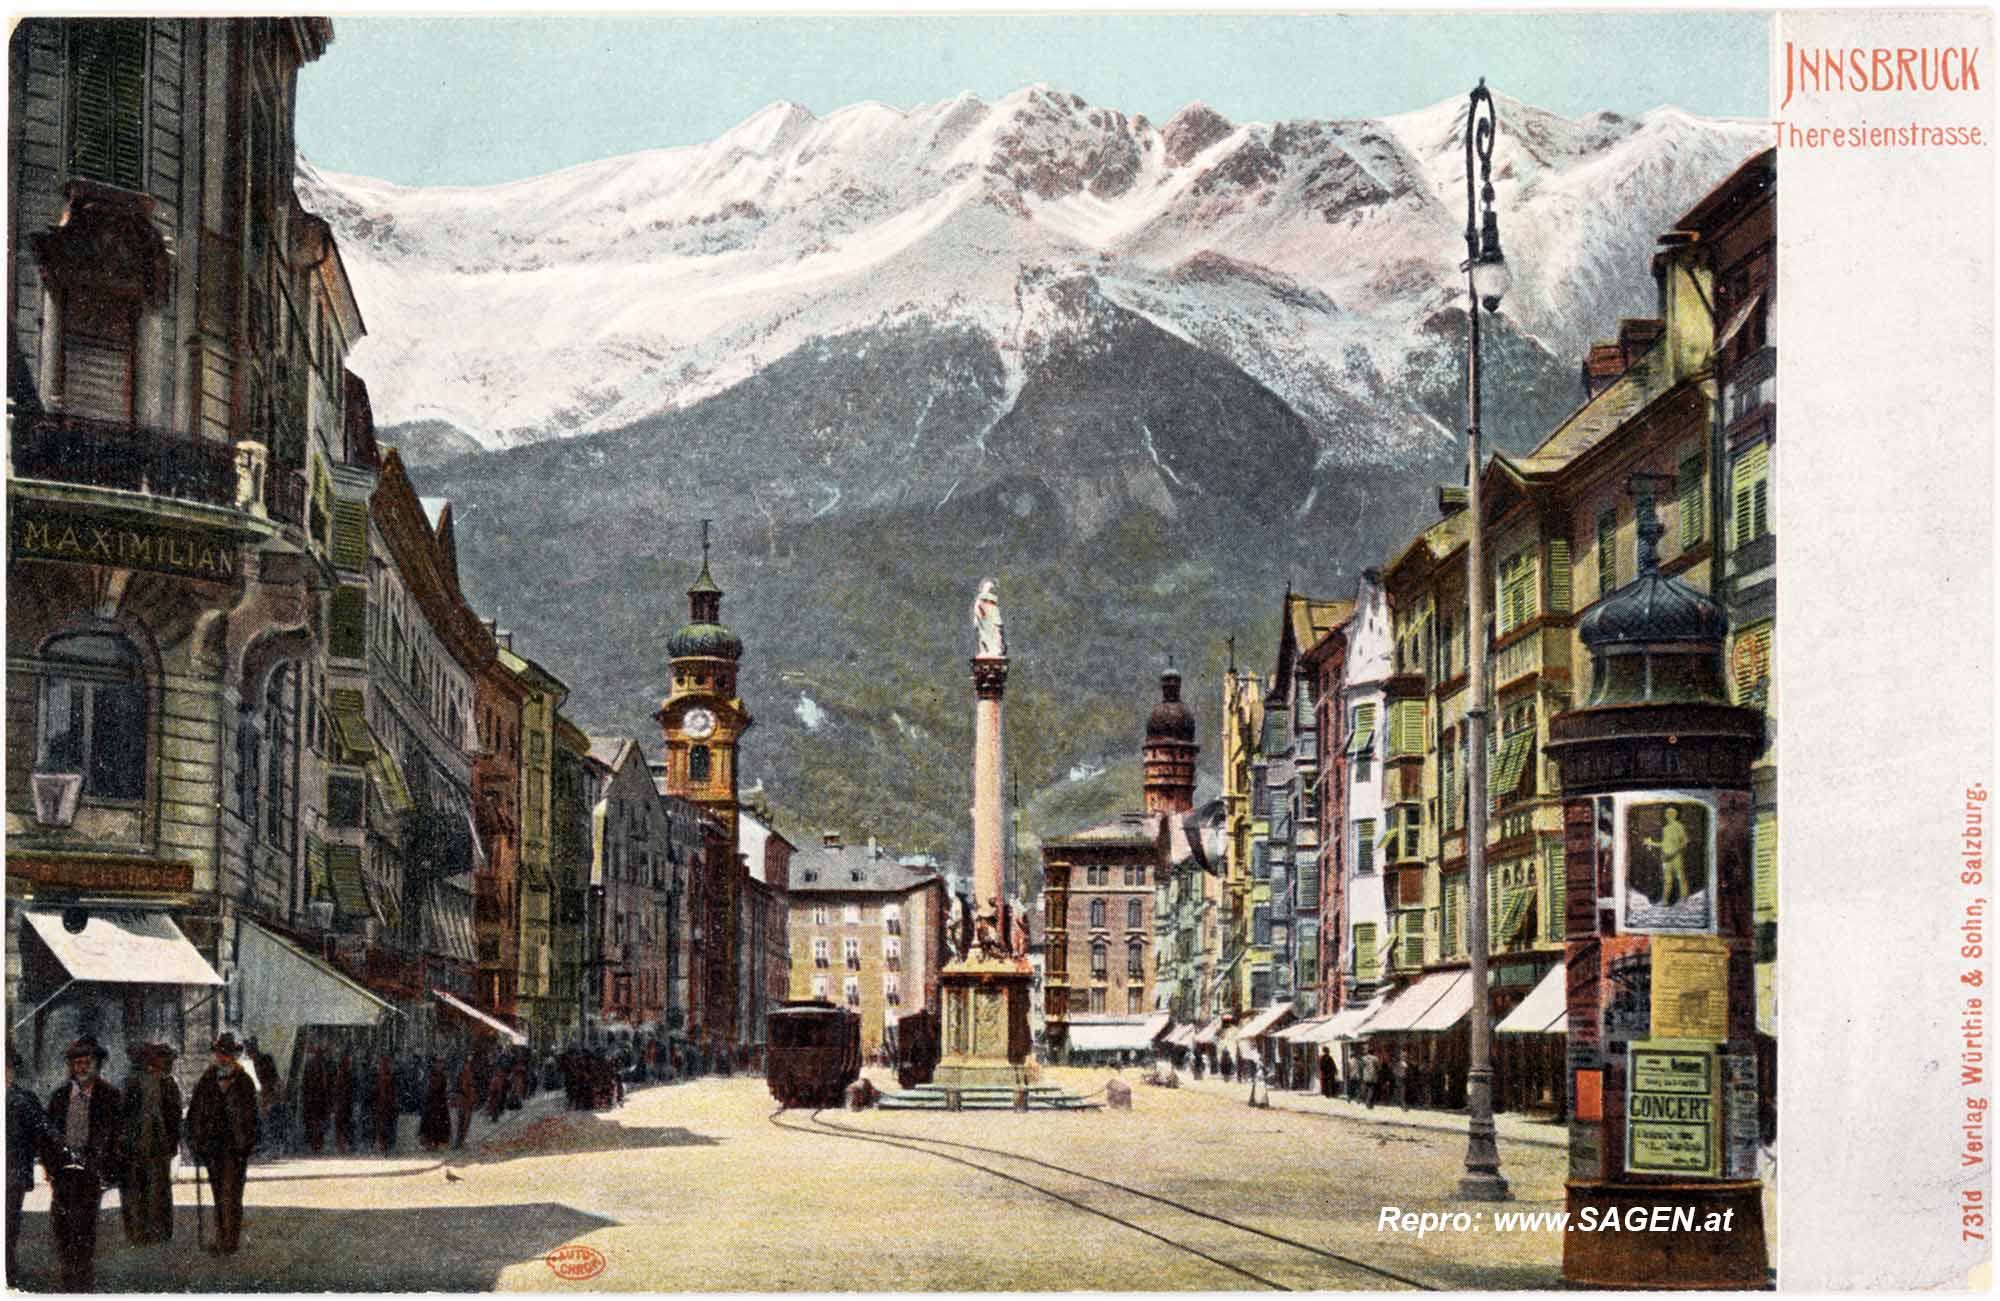 Innsbruck Theresienstrasse